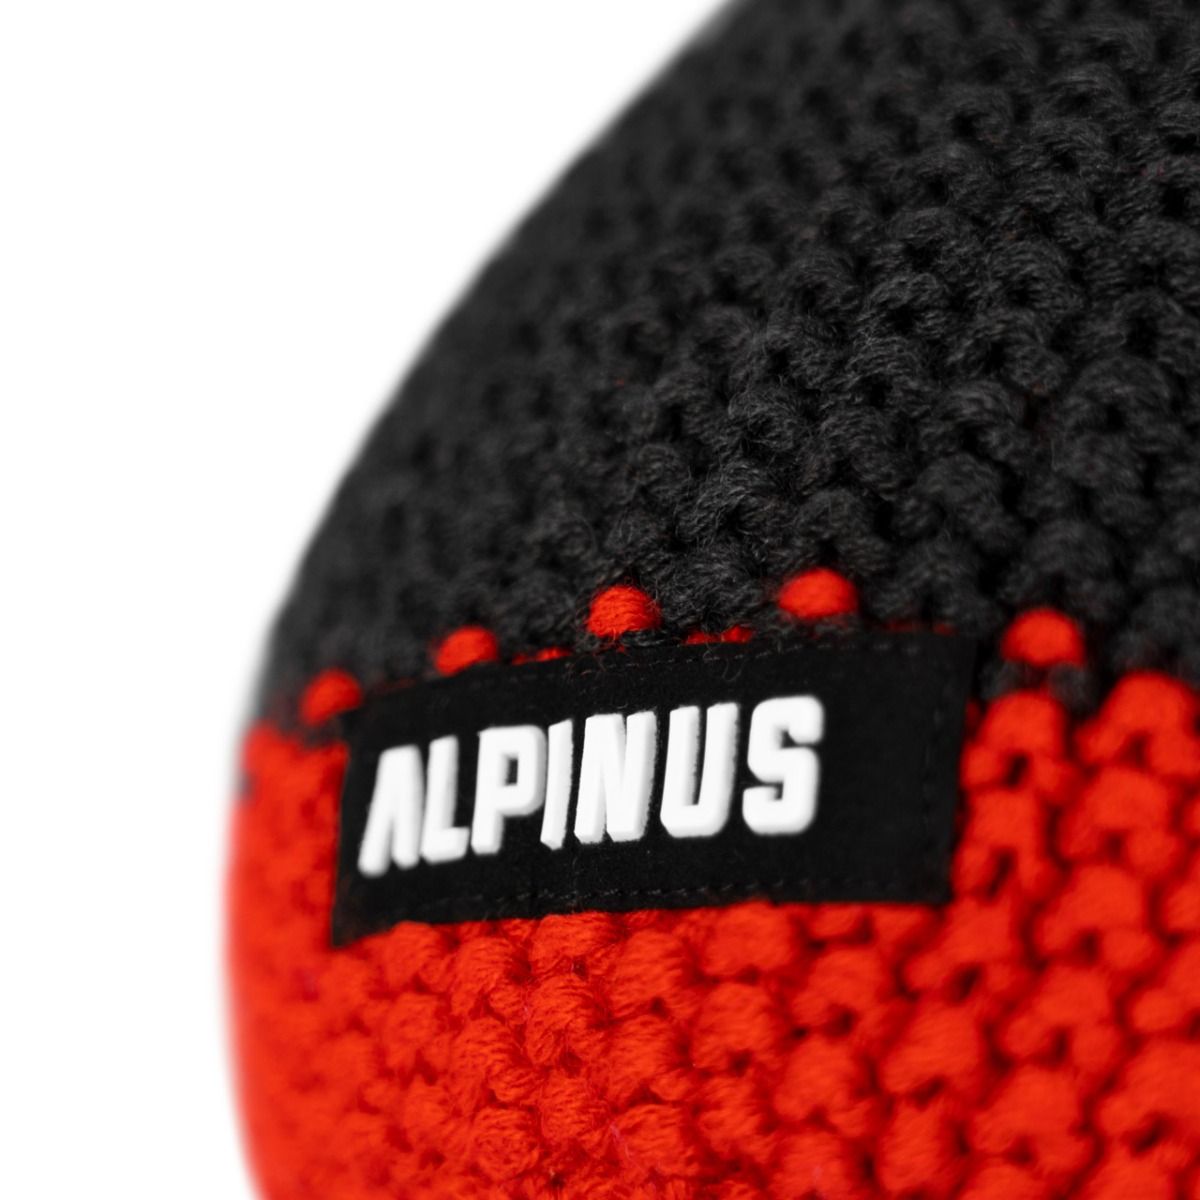 Alpinus Zimní čepice Mutenia Hat TT43839